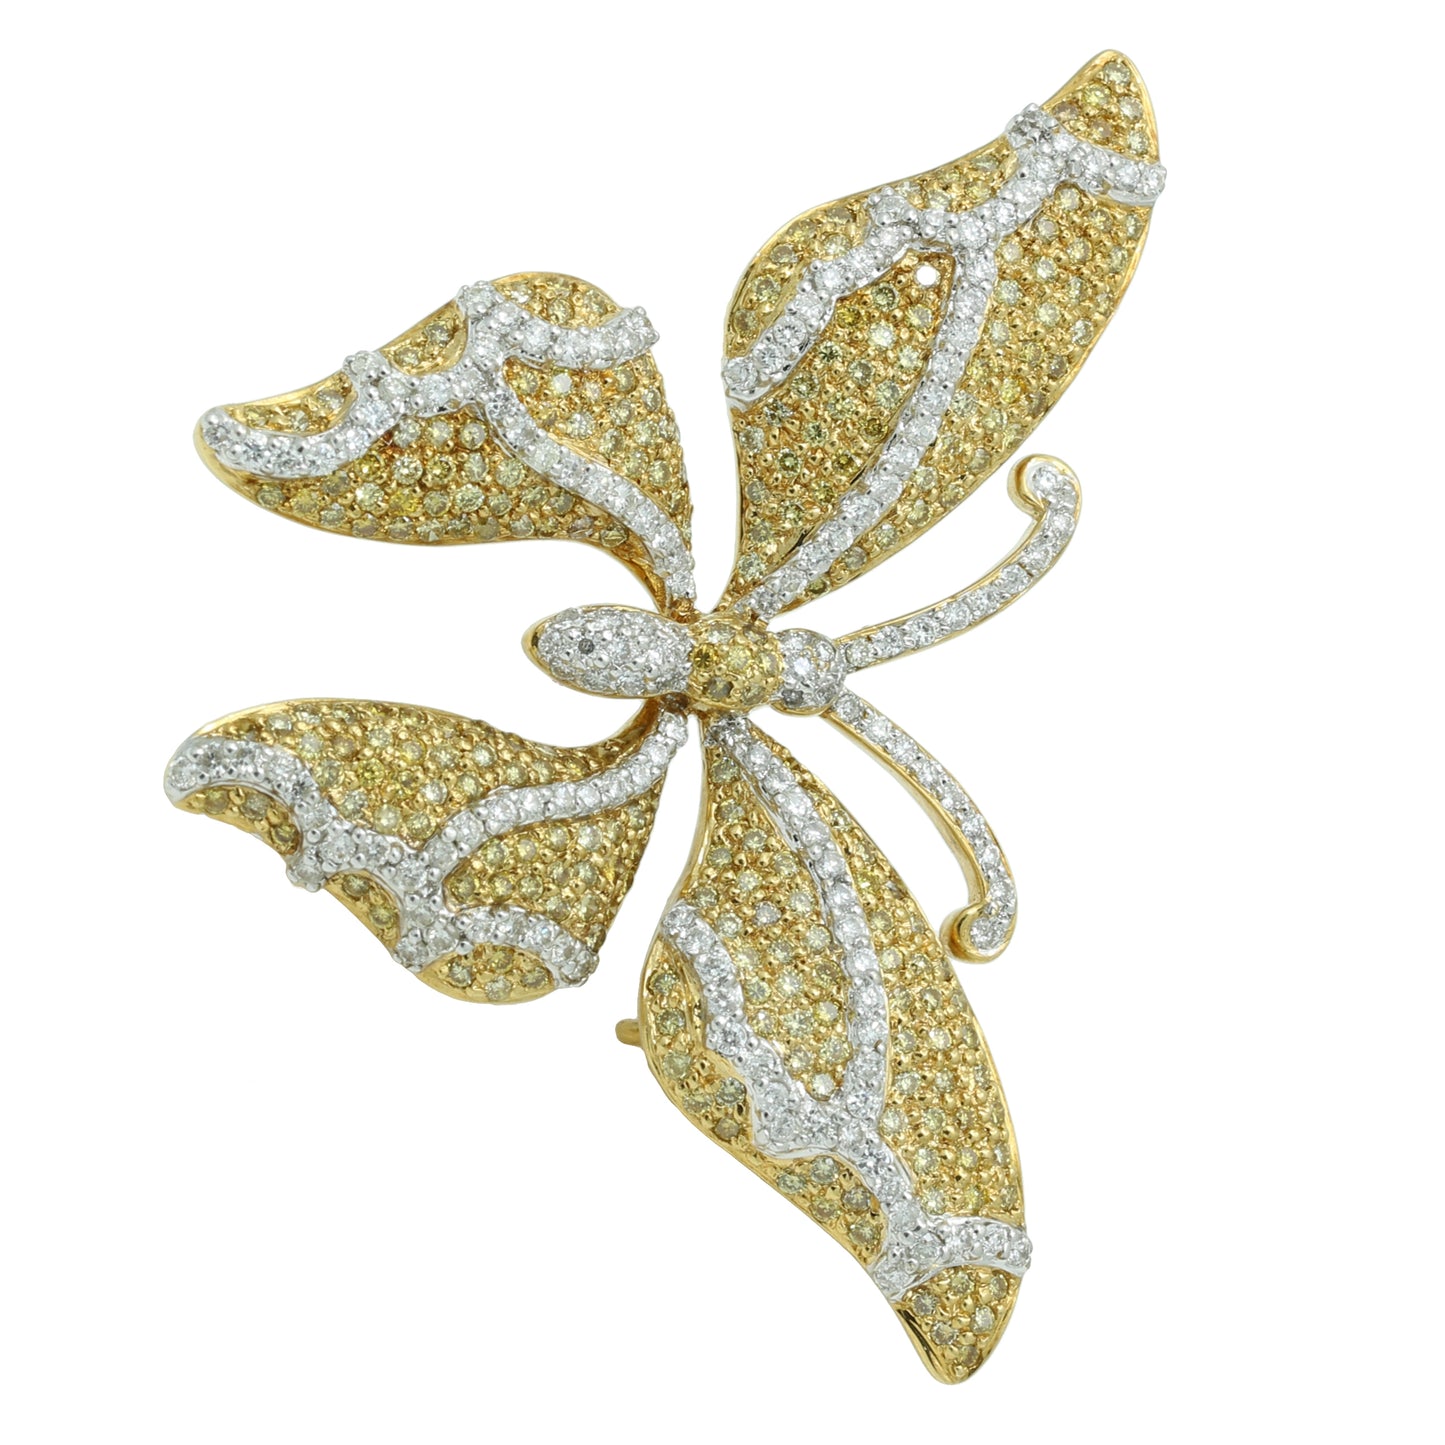 Statement Butterfly Pave Fancy Diamond Brooch - 18K Yellow Gold